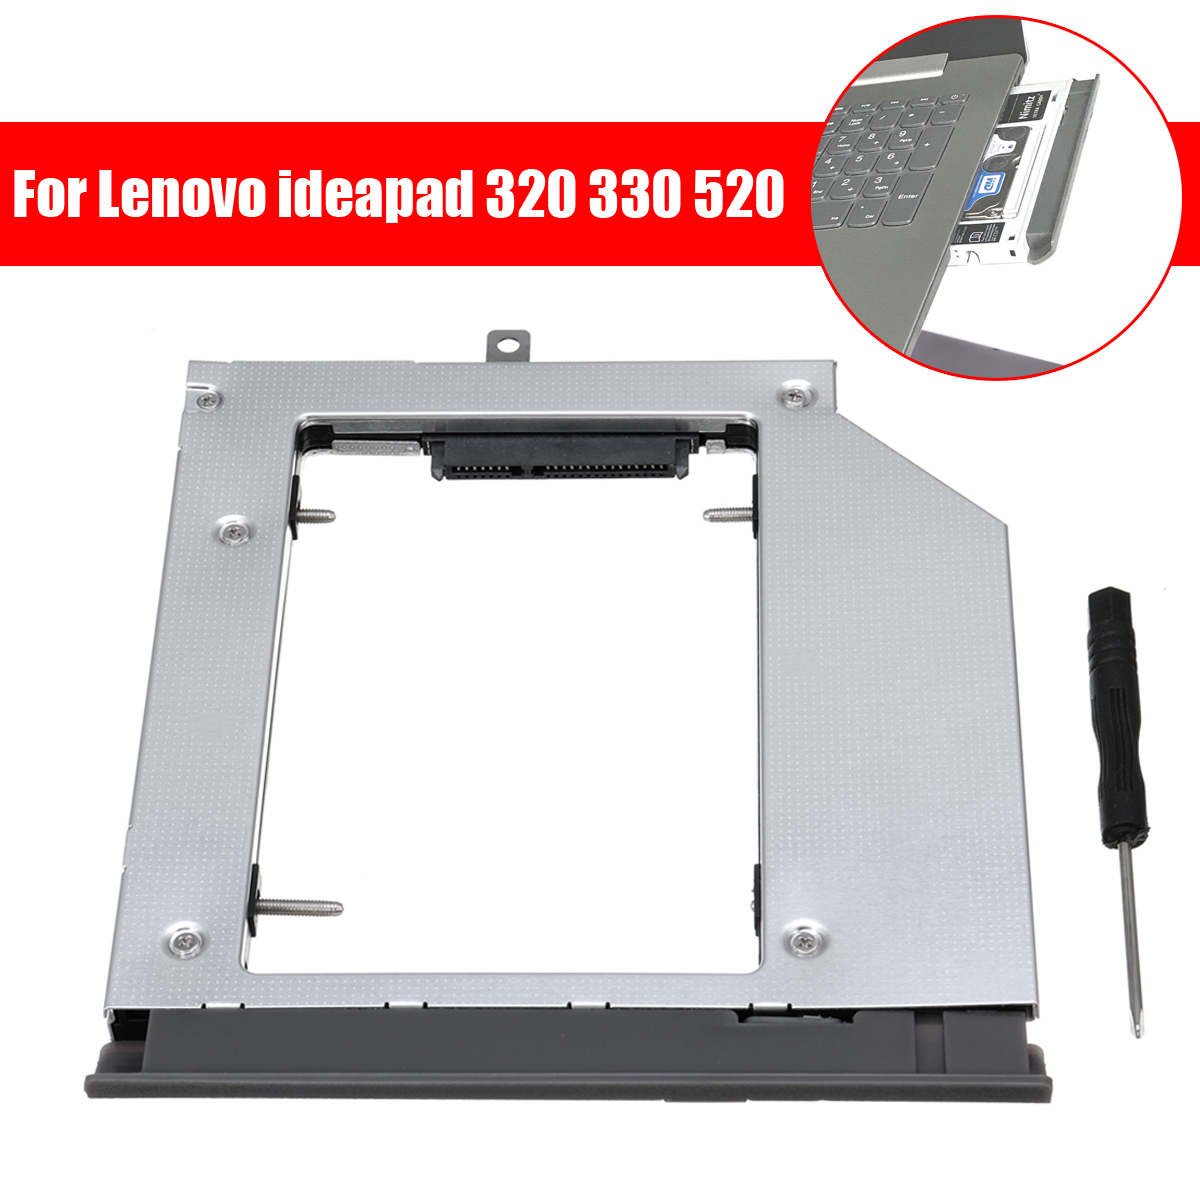 Notebook Optical Drive Bay Hard Drive Caddy For Lenovo ideapad 320 330 520 Converter 7